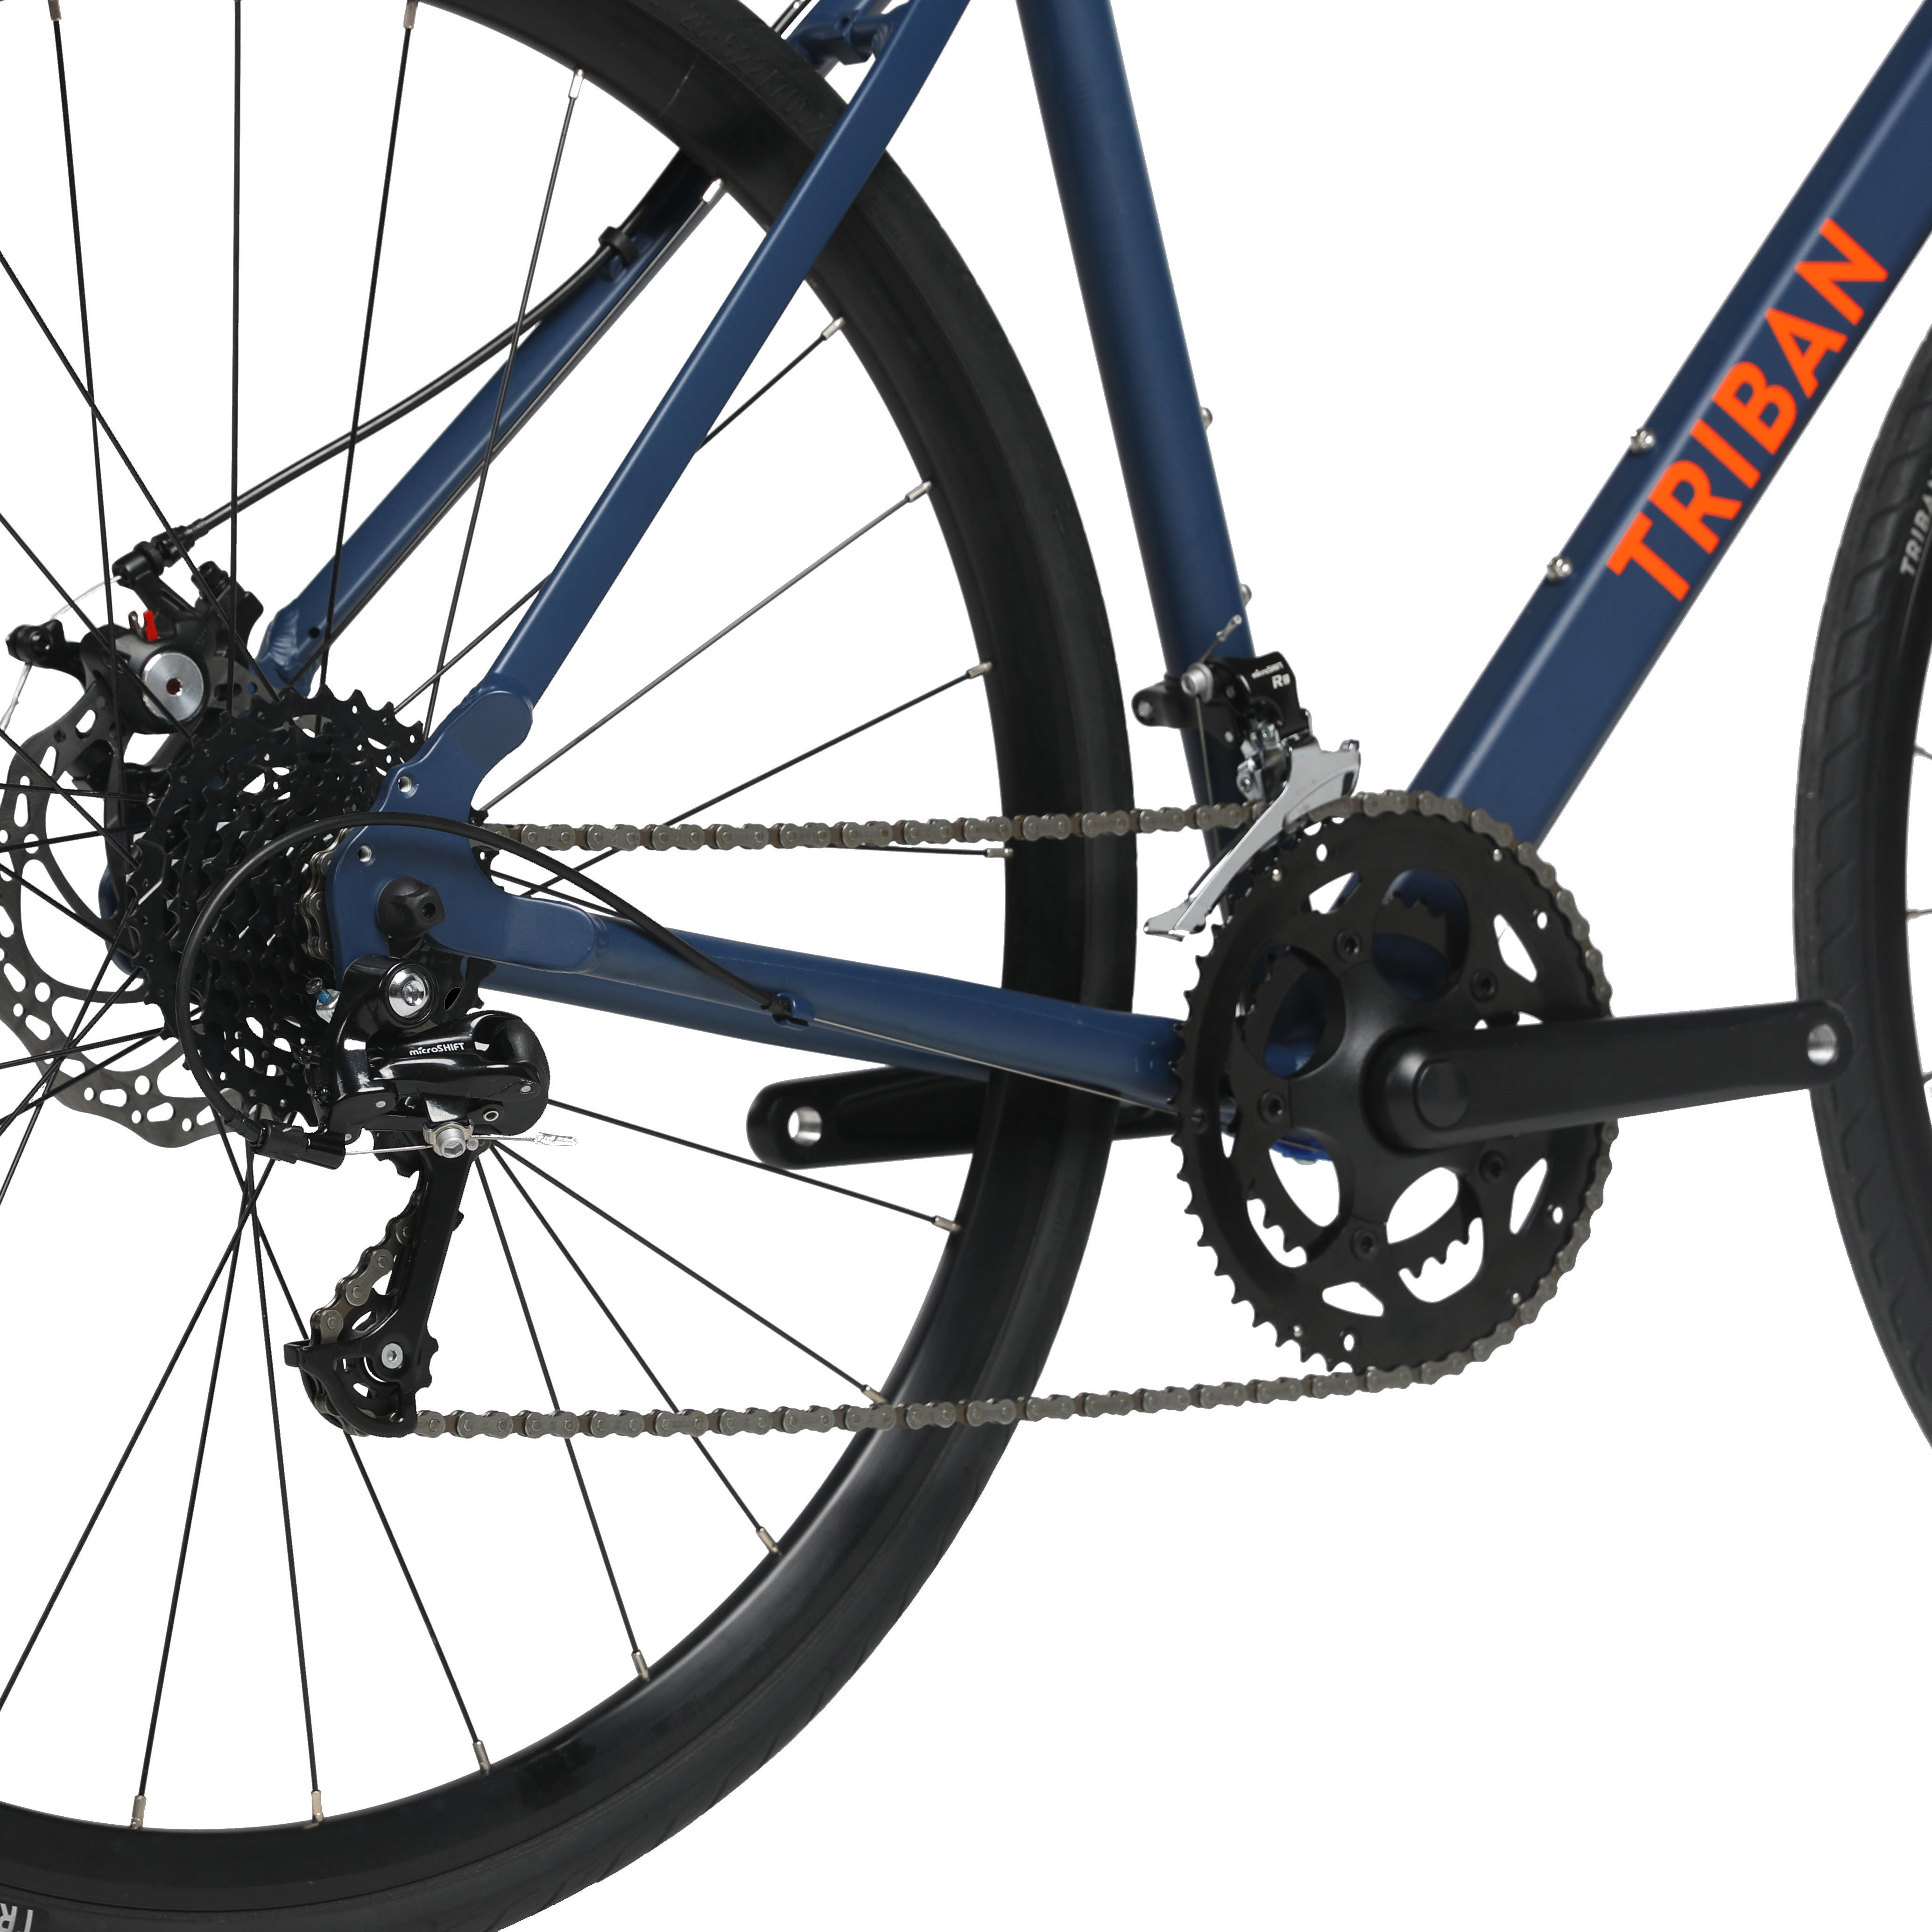 Vélo avec freins à disque guidon plat - RC 120 bleu/orange - TRIBAN